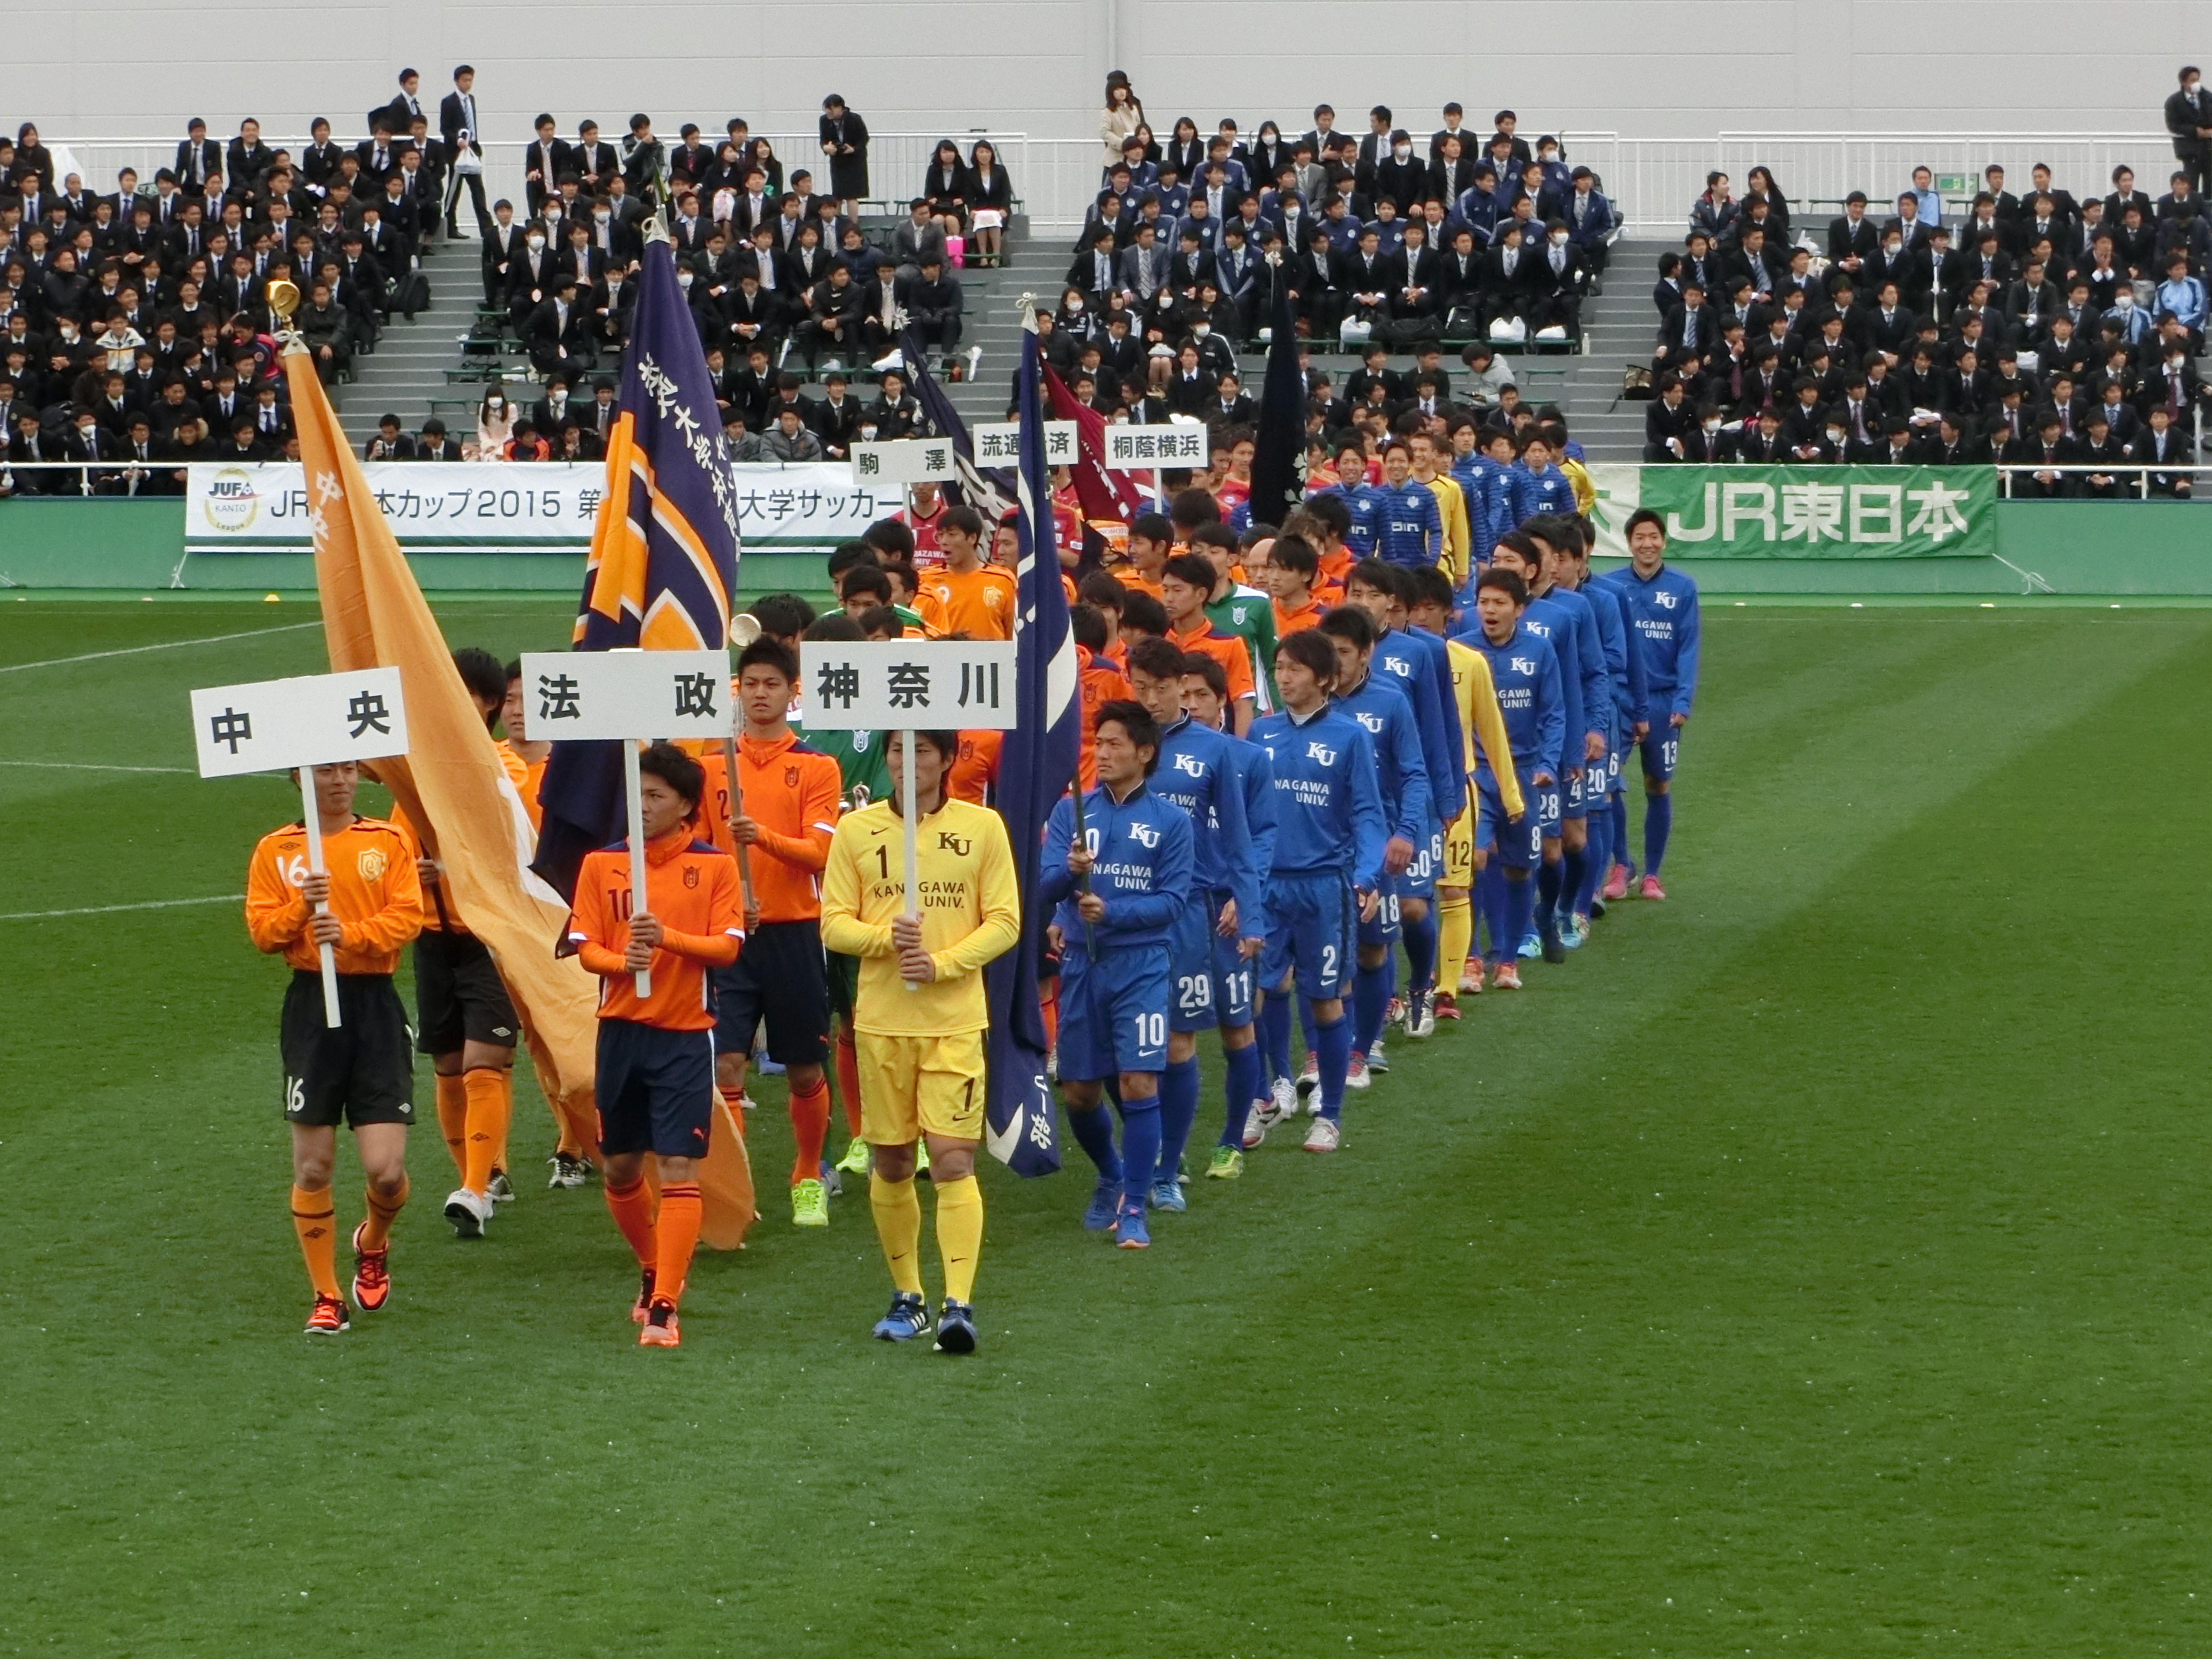 https://football.ku-sports.jp/blog/players/images/20150405192606.jpg